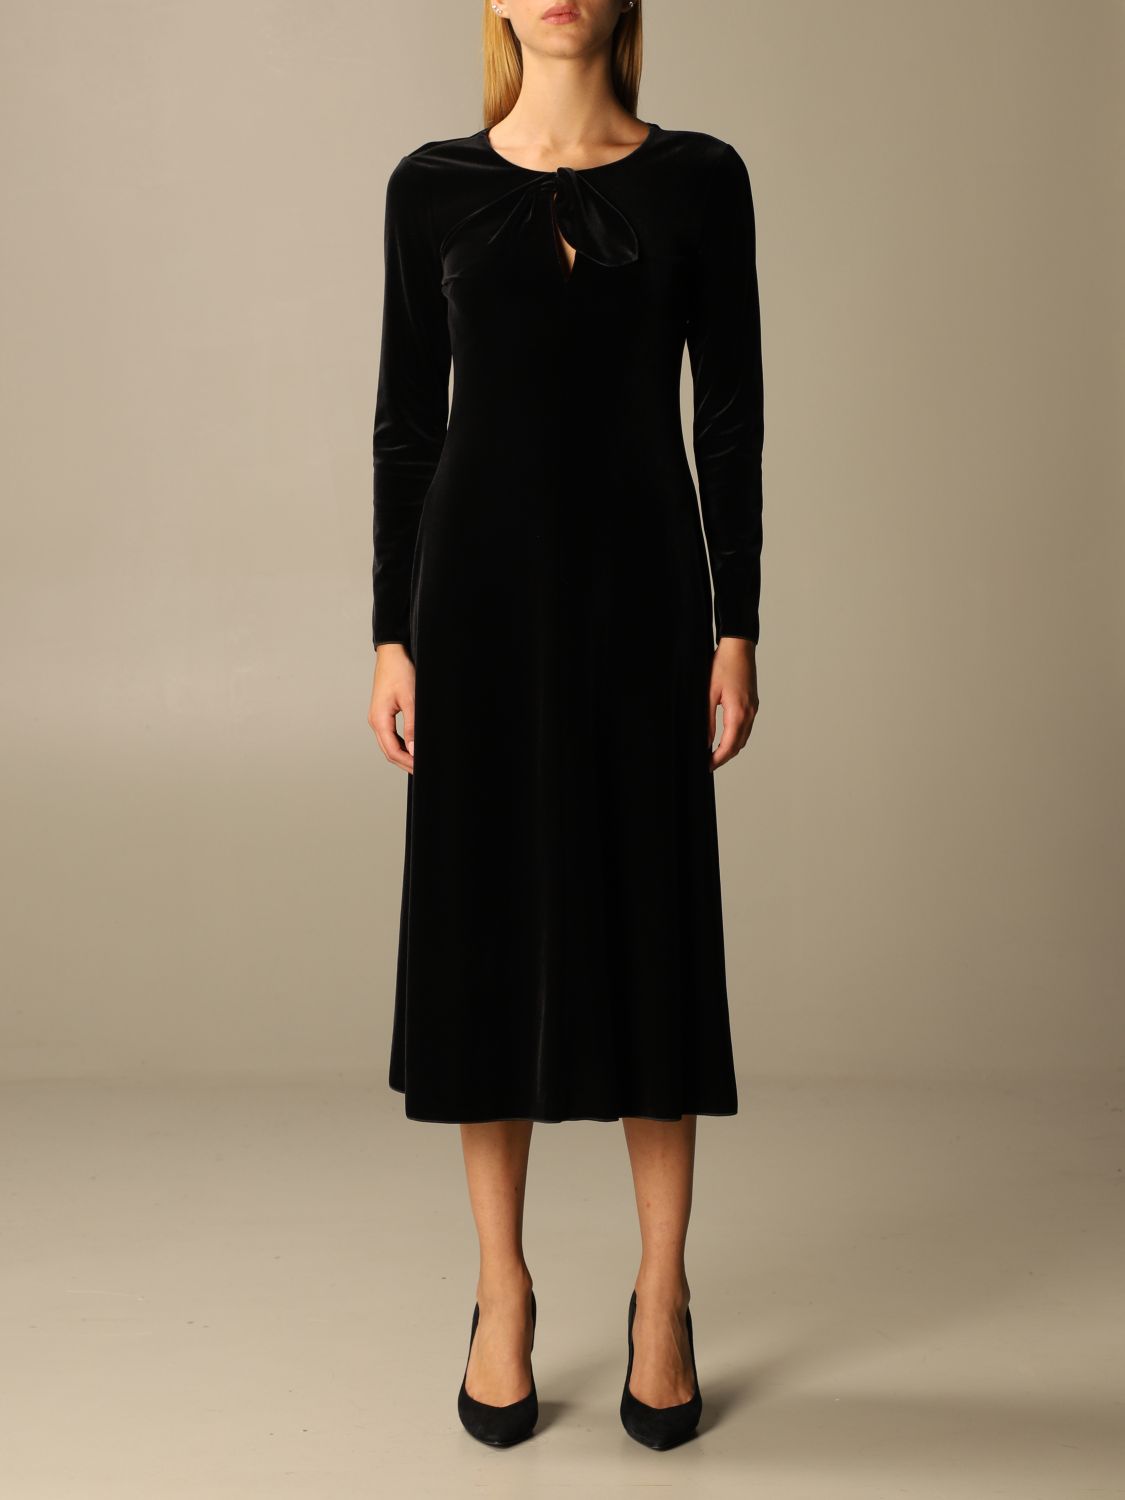 Emporio Armani Outlet: midi dress in velvet - Black | Emporio Armani dress  6H2A8N 2JW4Z online on 